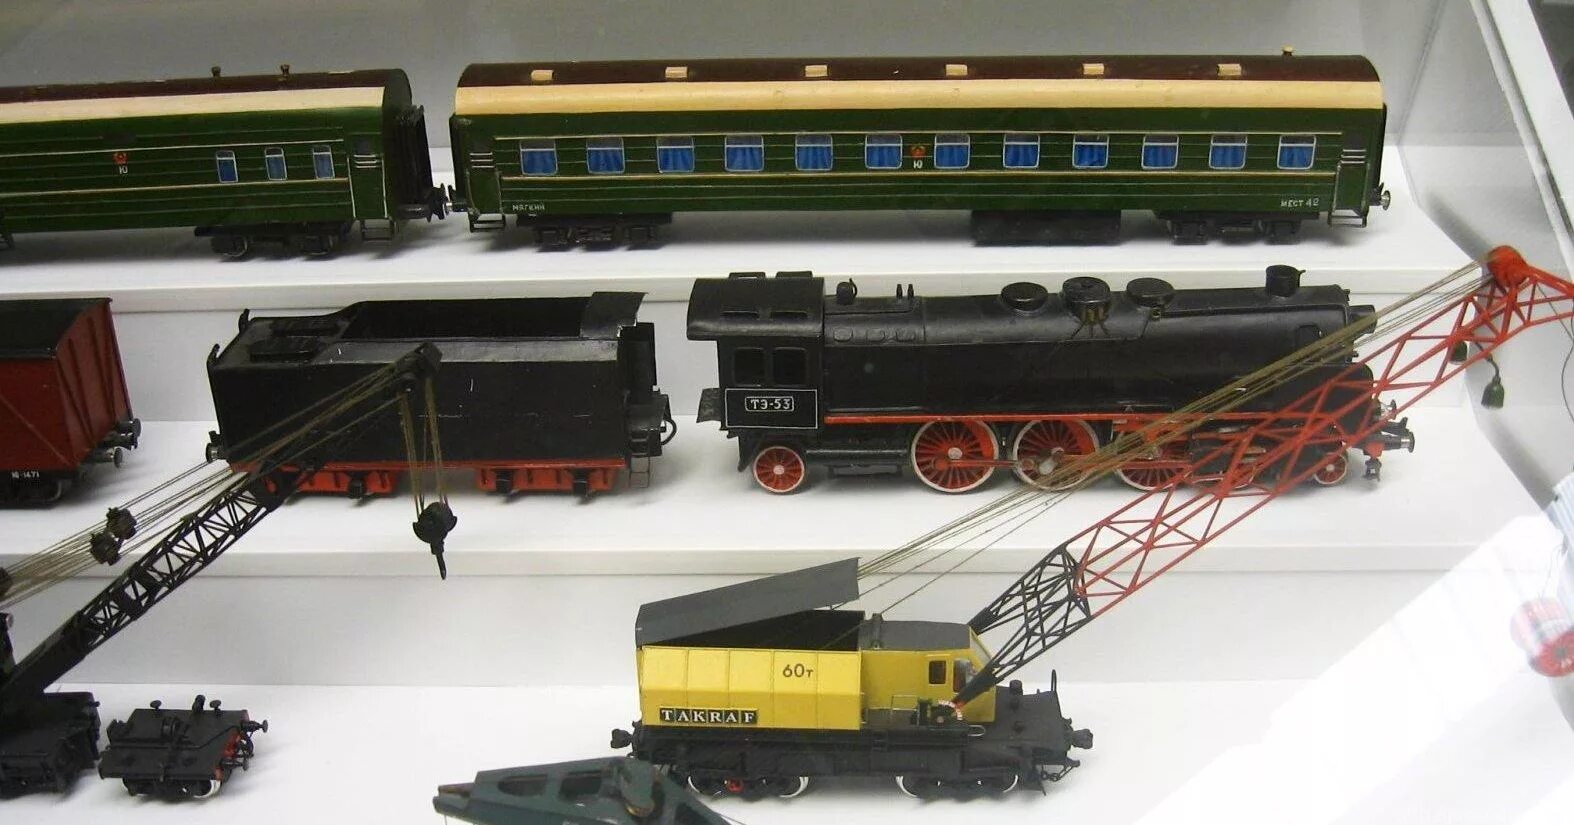 Кран ЖД 1/87 СЖД. Модель железная дорога 1:87. Модели железной дороги 1 87. Масштабная модель железной дороги.